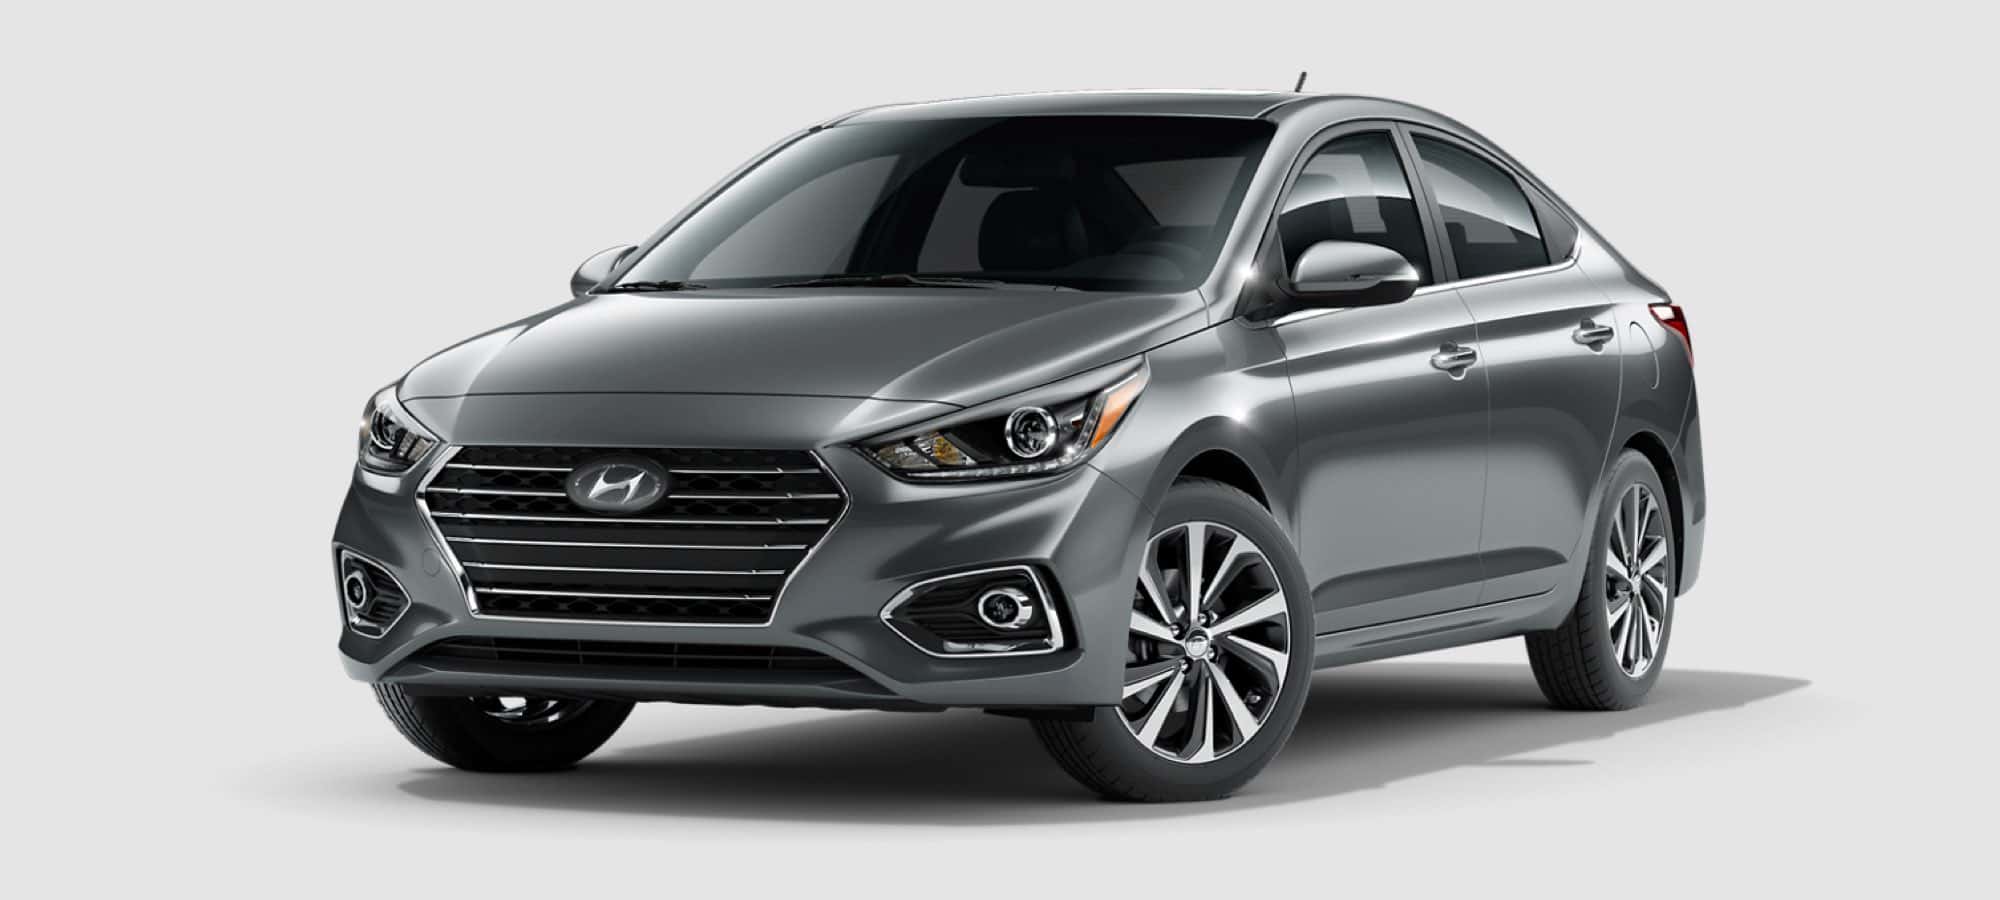 2021 Hyundai Accent Colors, Price, Specs | Luther Burnsville Hyundai